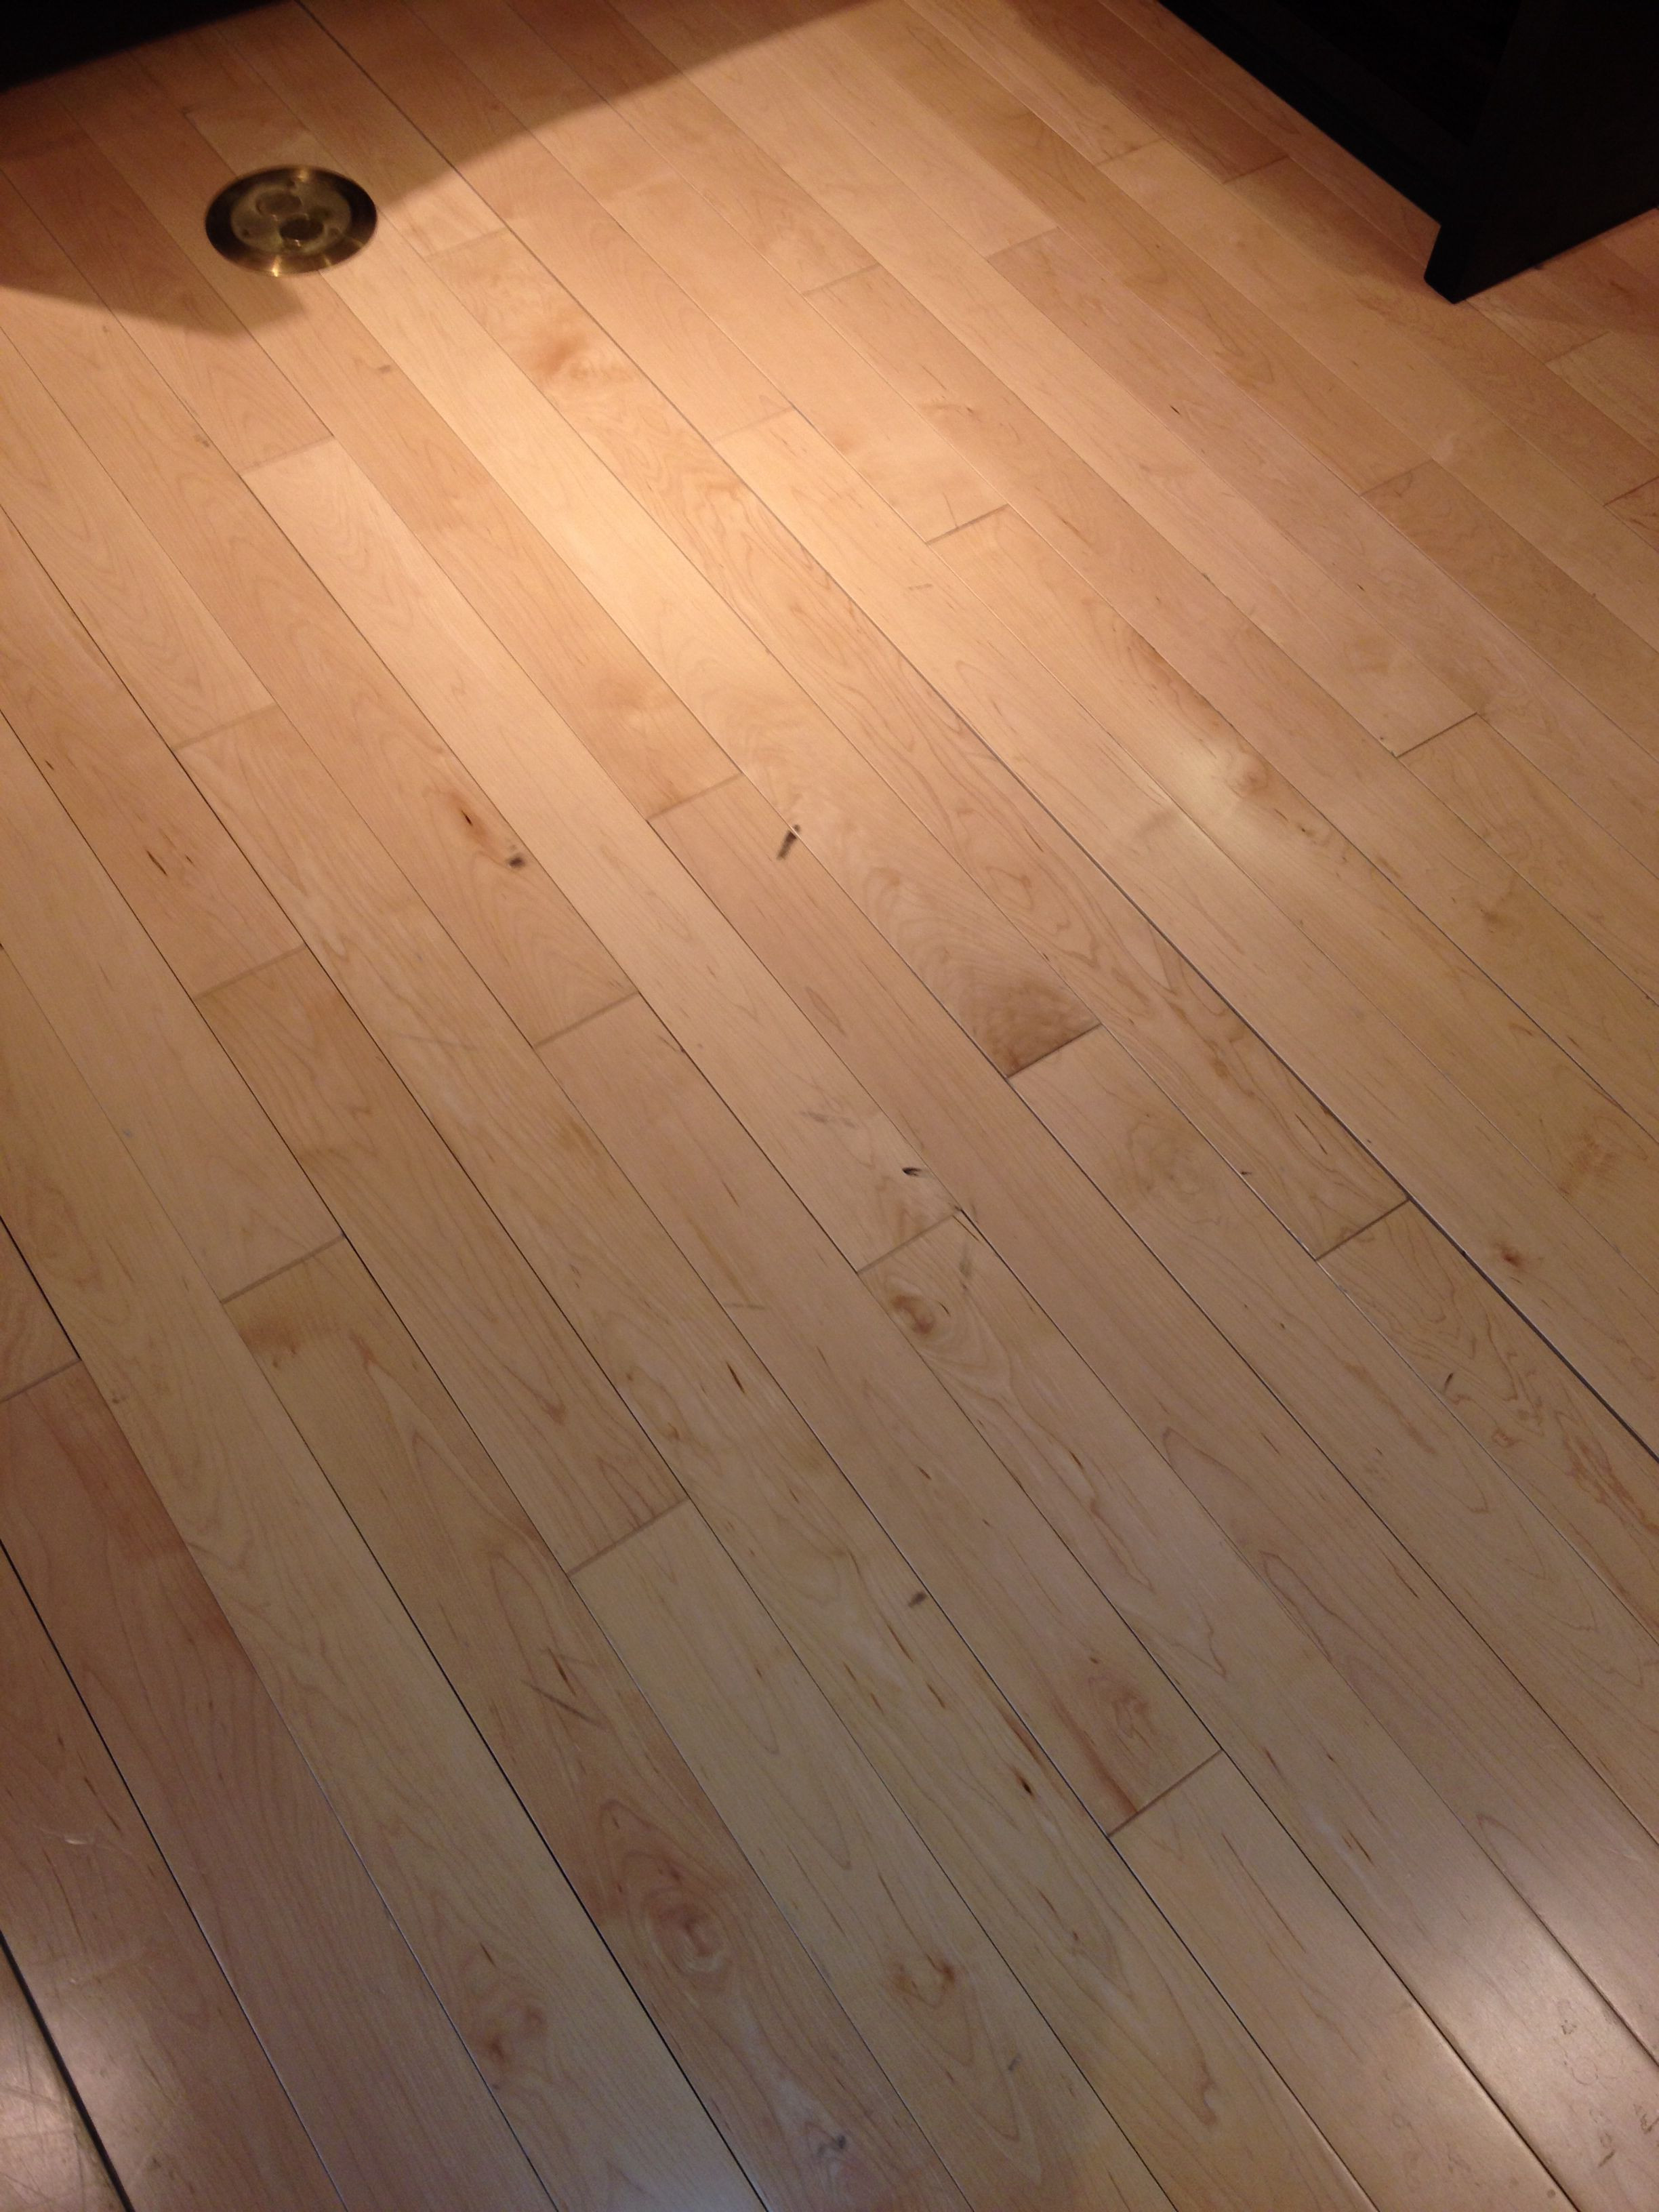 10 Fashionable Hardwood Floors Next to Tile 2022 free download hardwood floors next to tile of maple wood floors retail design sketch rendering pinterest regarding maple wood floors